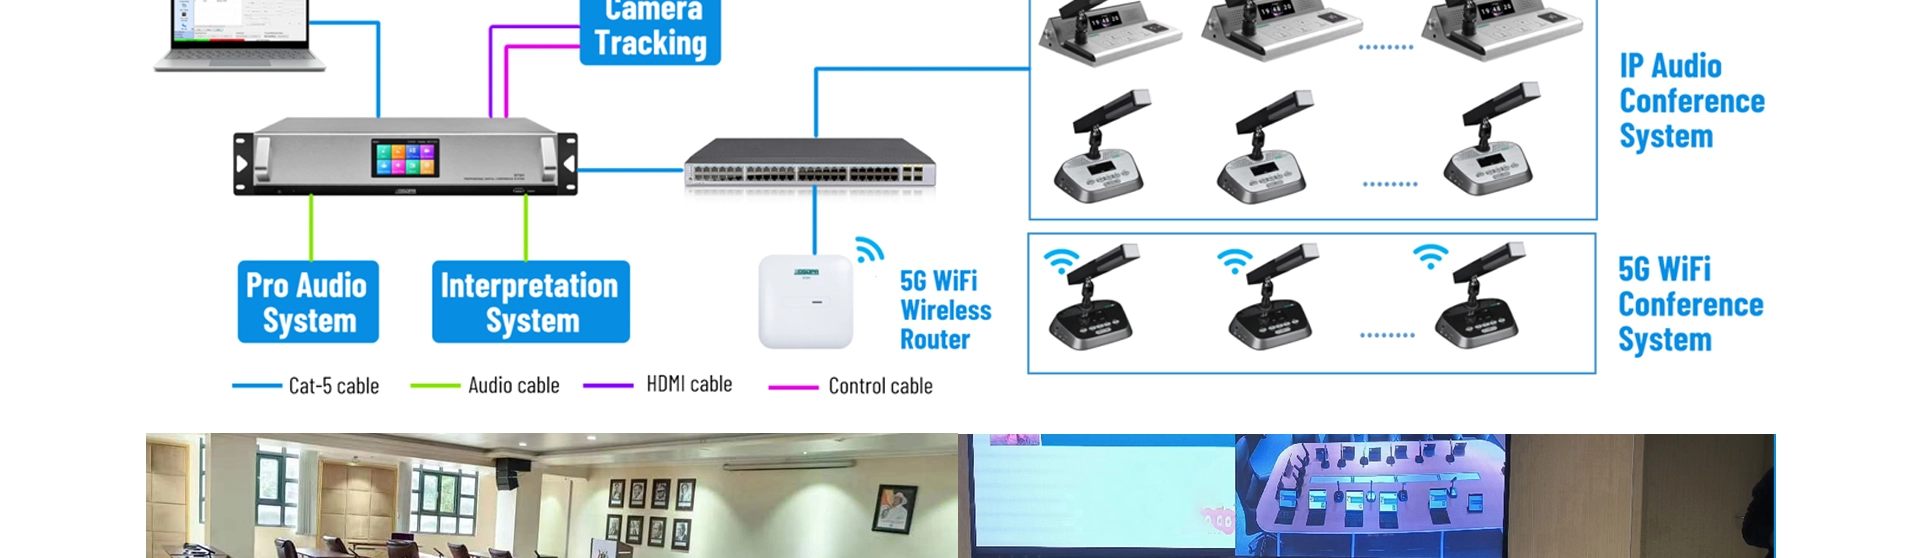 Wireless Conference System 5G WiFi Wireless Digital Voting Delegate Unit